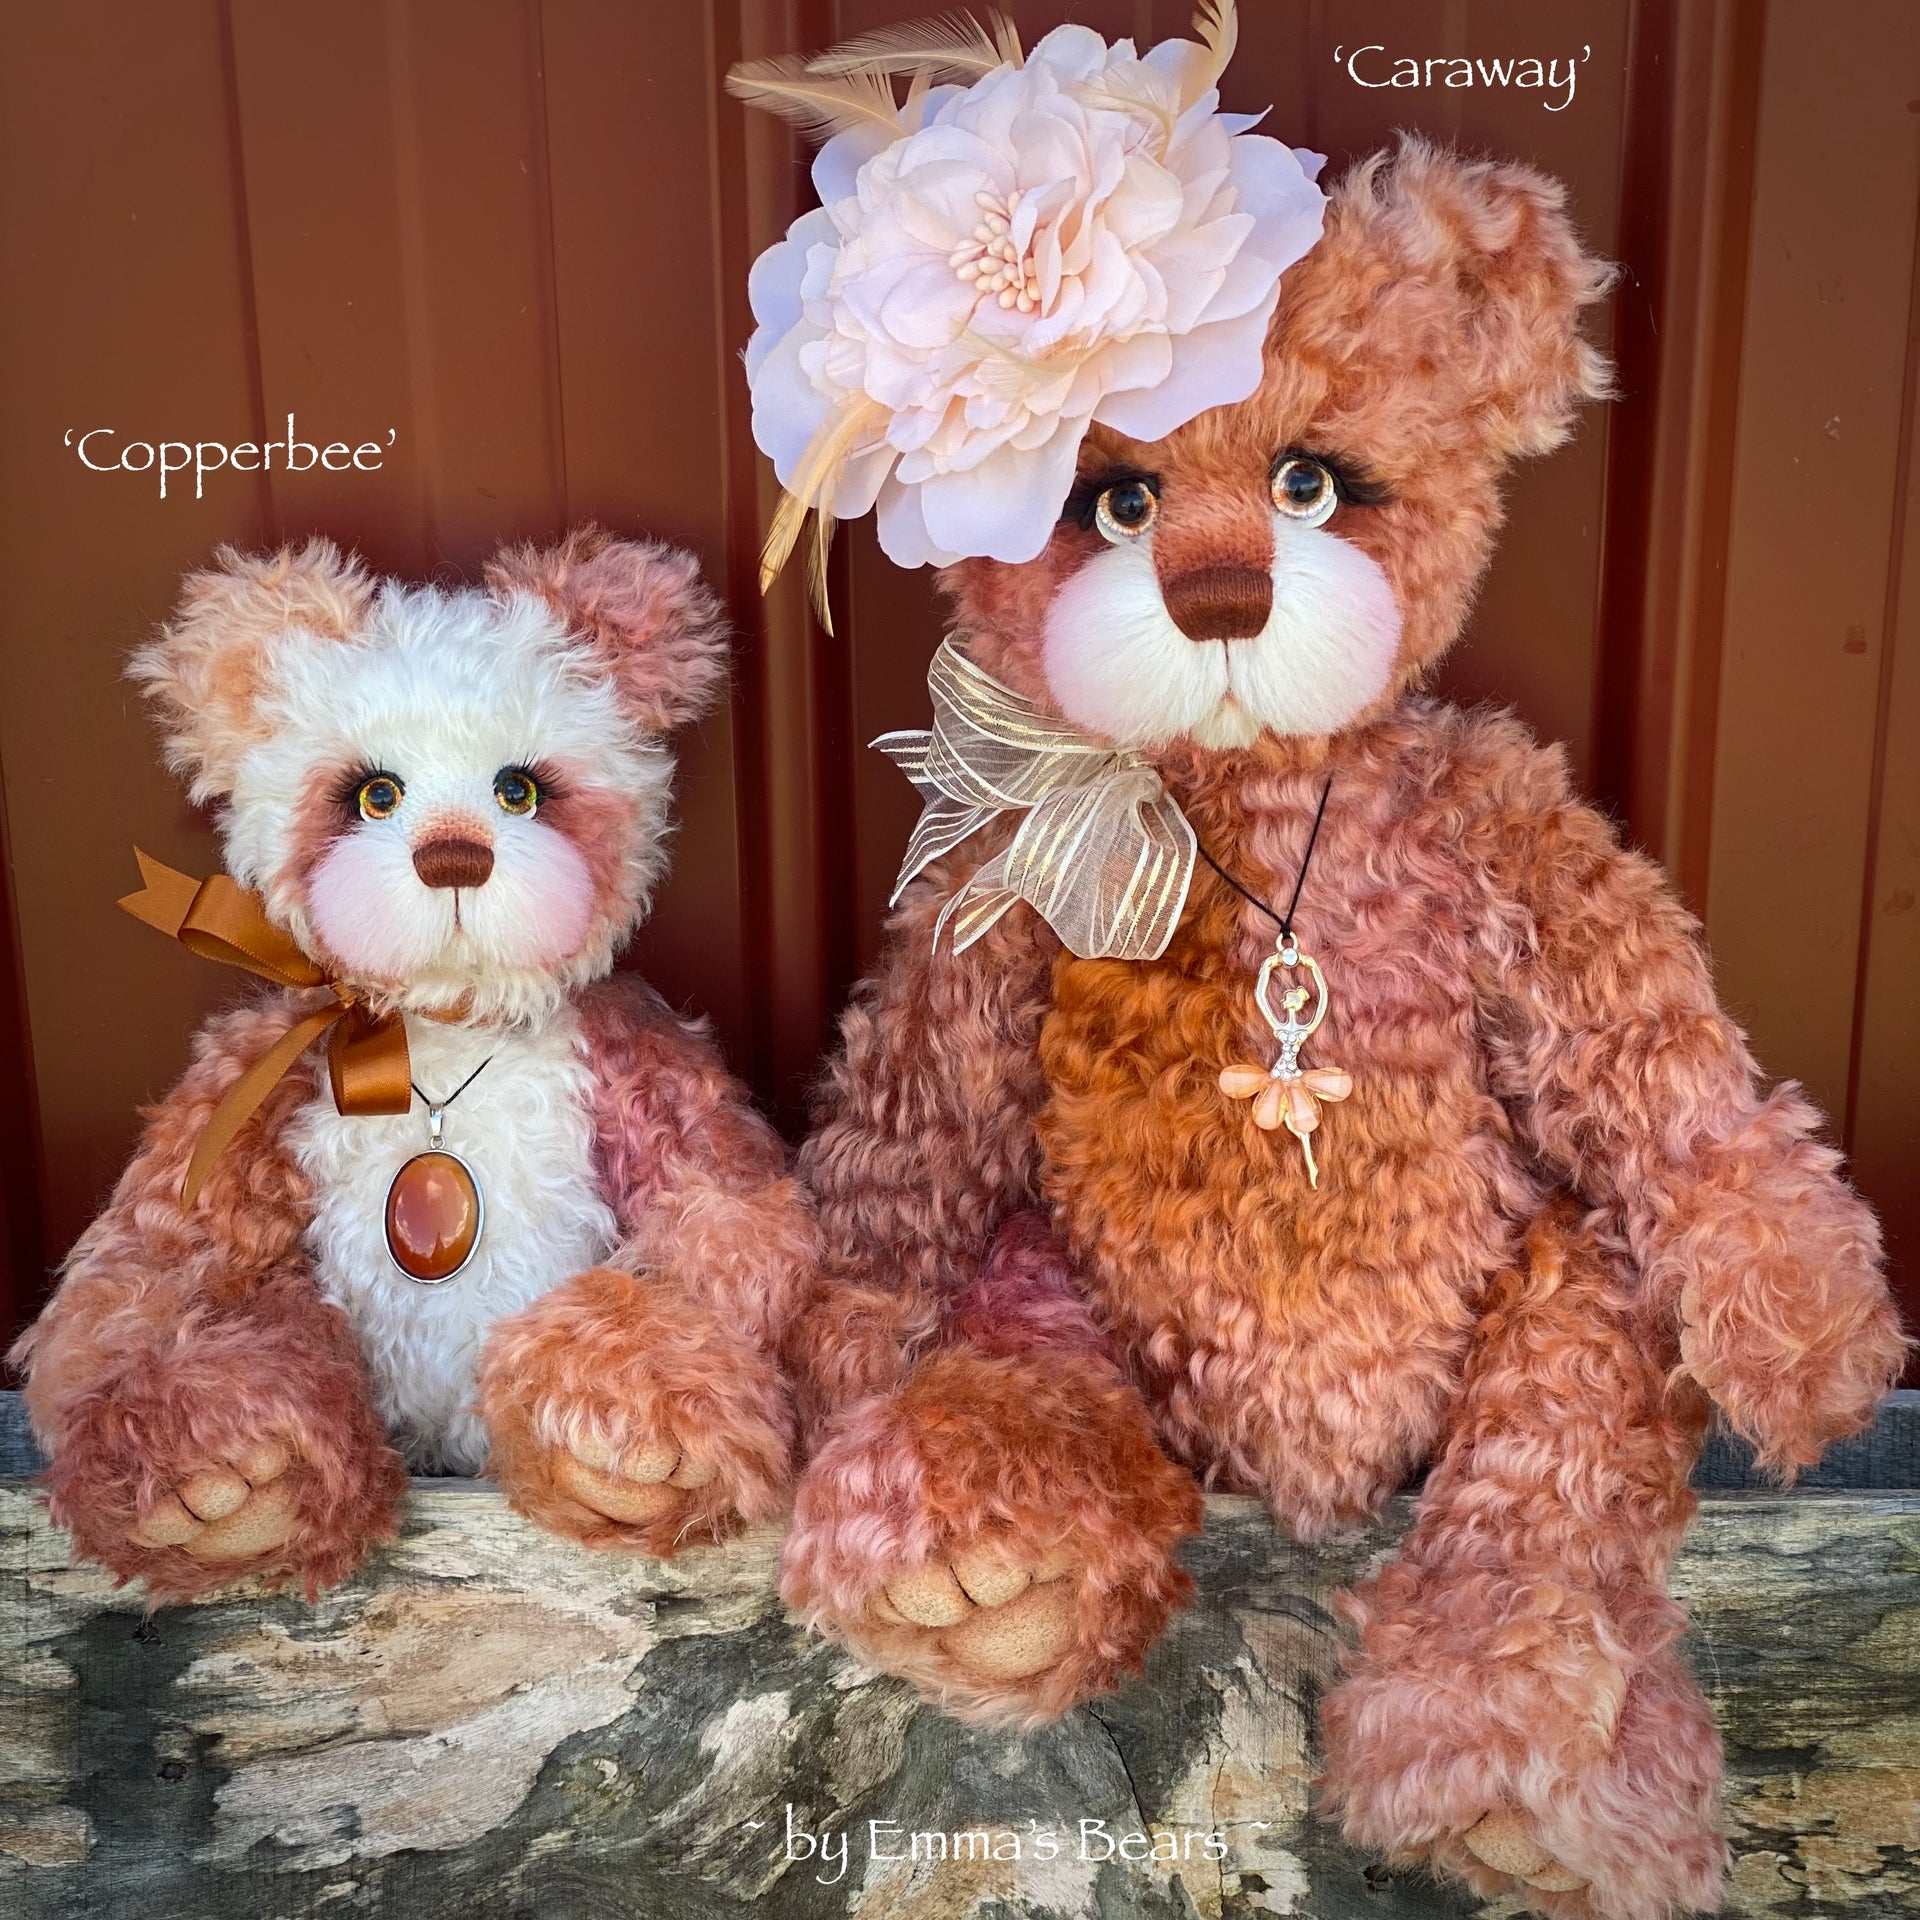 Caraway - 16" Curly Kid Mohair and Alpaca artist bear by Emma's Bears - OOAK